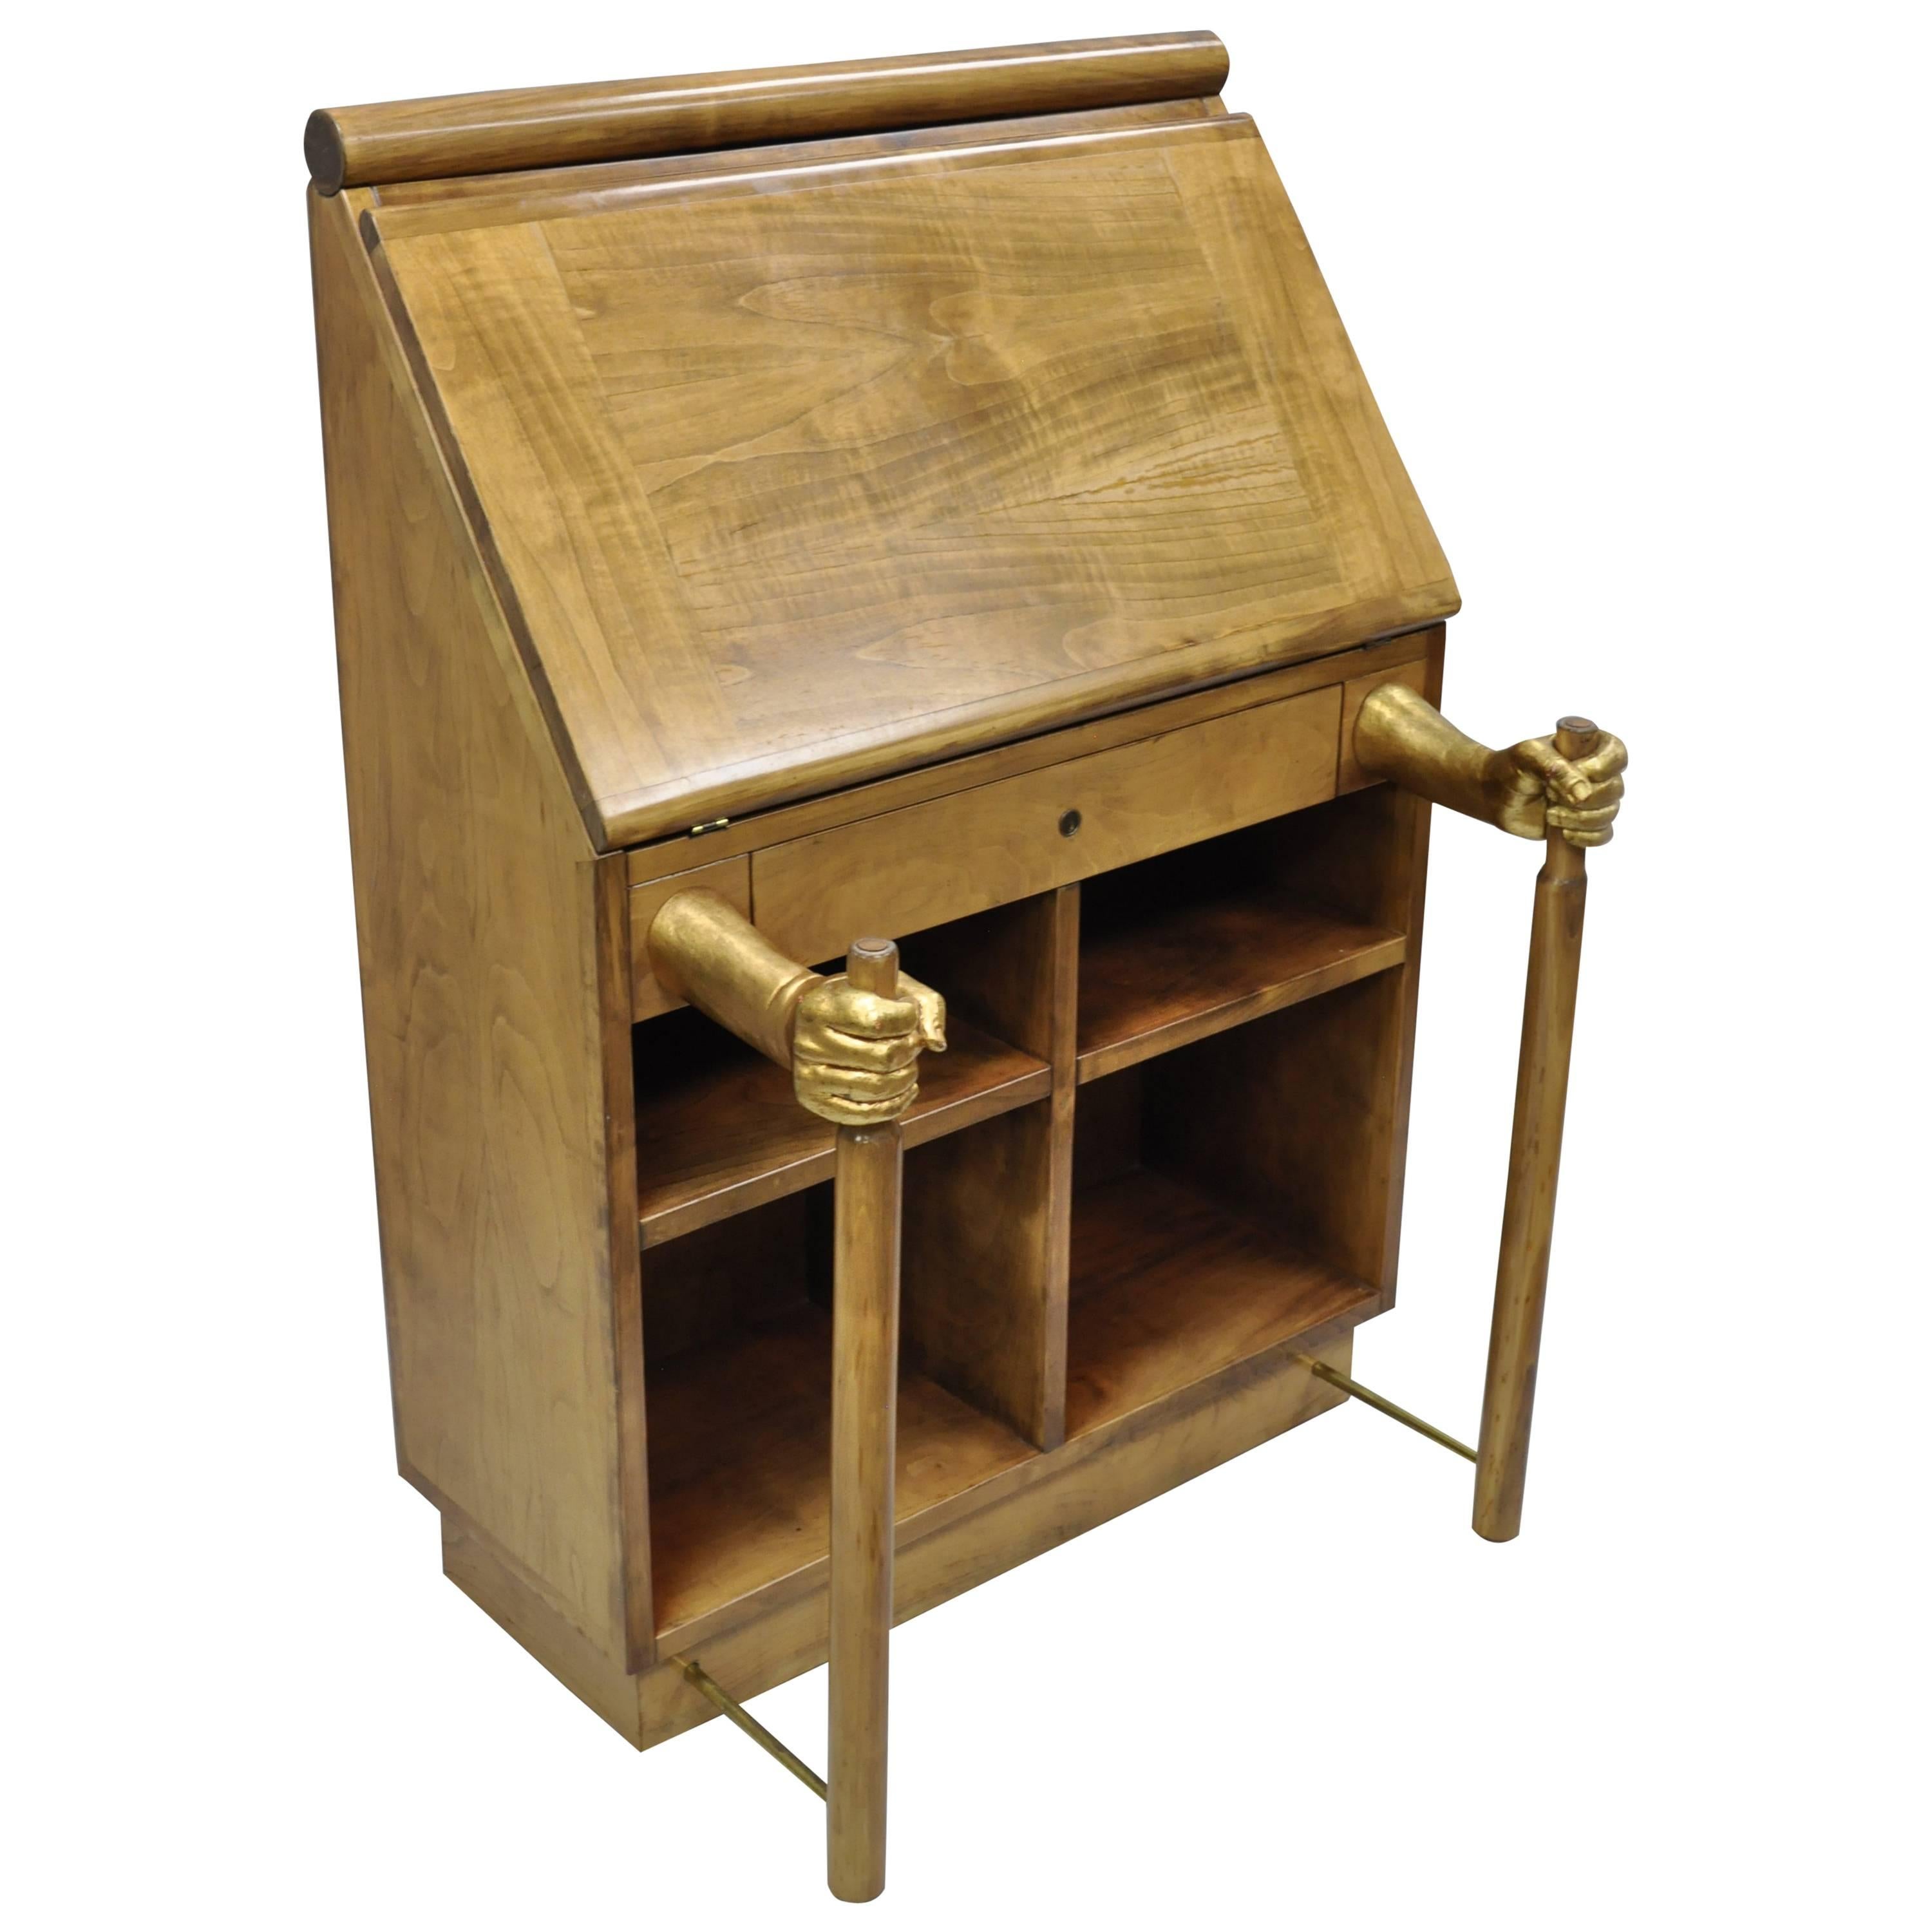 Amanuense Secretary Desk by Adolfo Natalini for Mirabili Limited Edition 2/99 For Sale